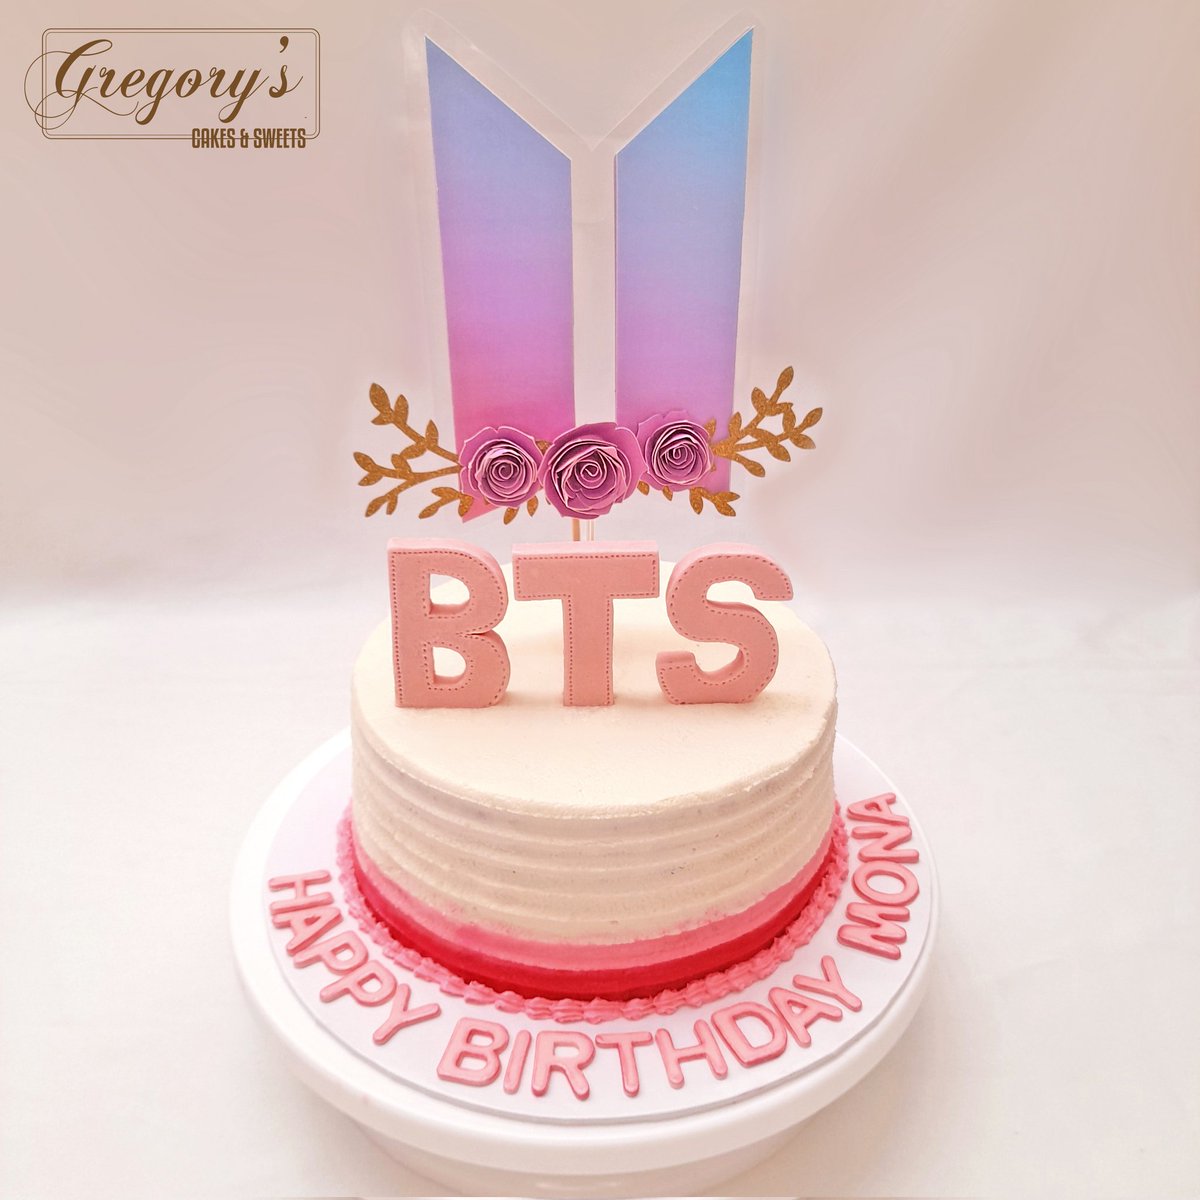 BTS themed birthday cake! | Bts cake, Cute birthday cakes, Cake designs  birthday